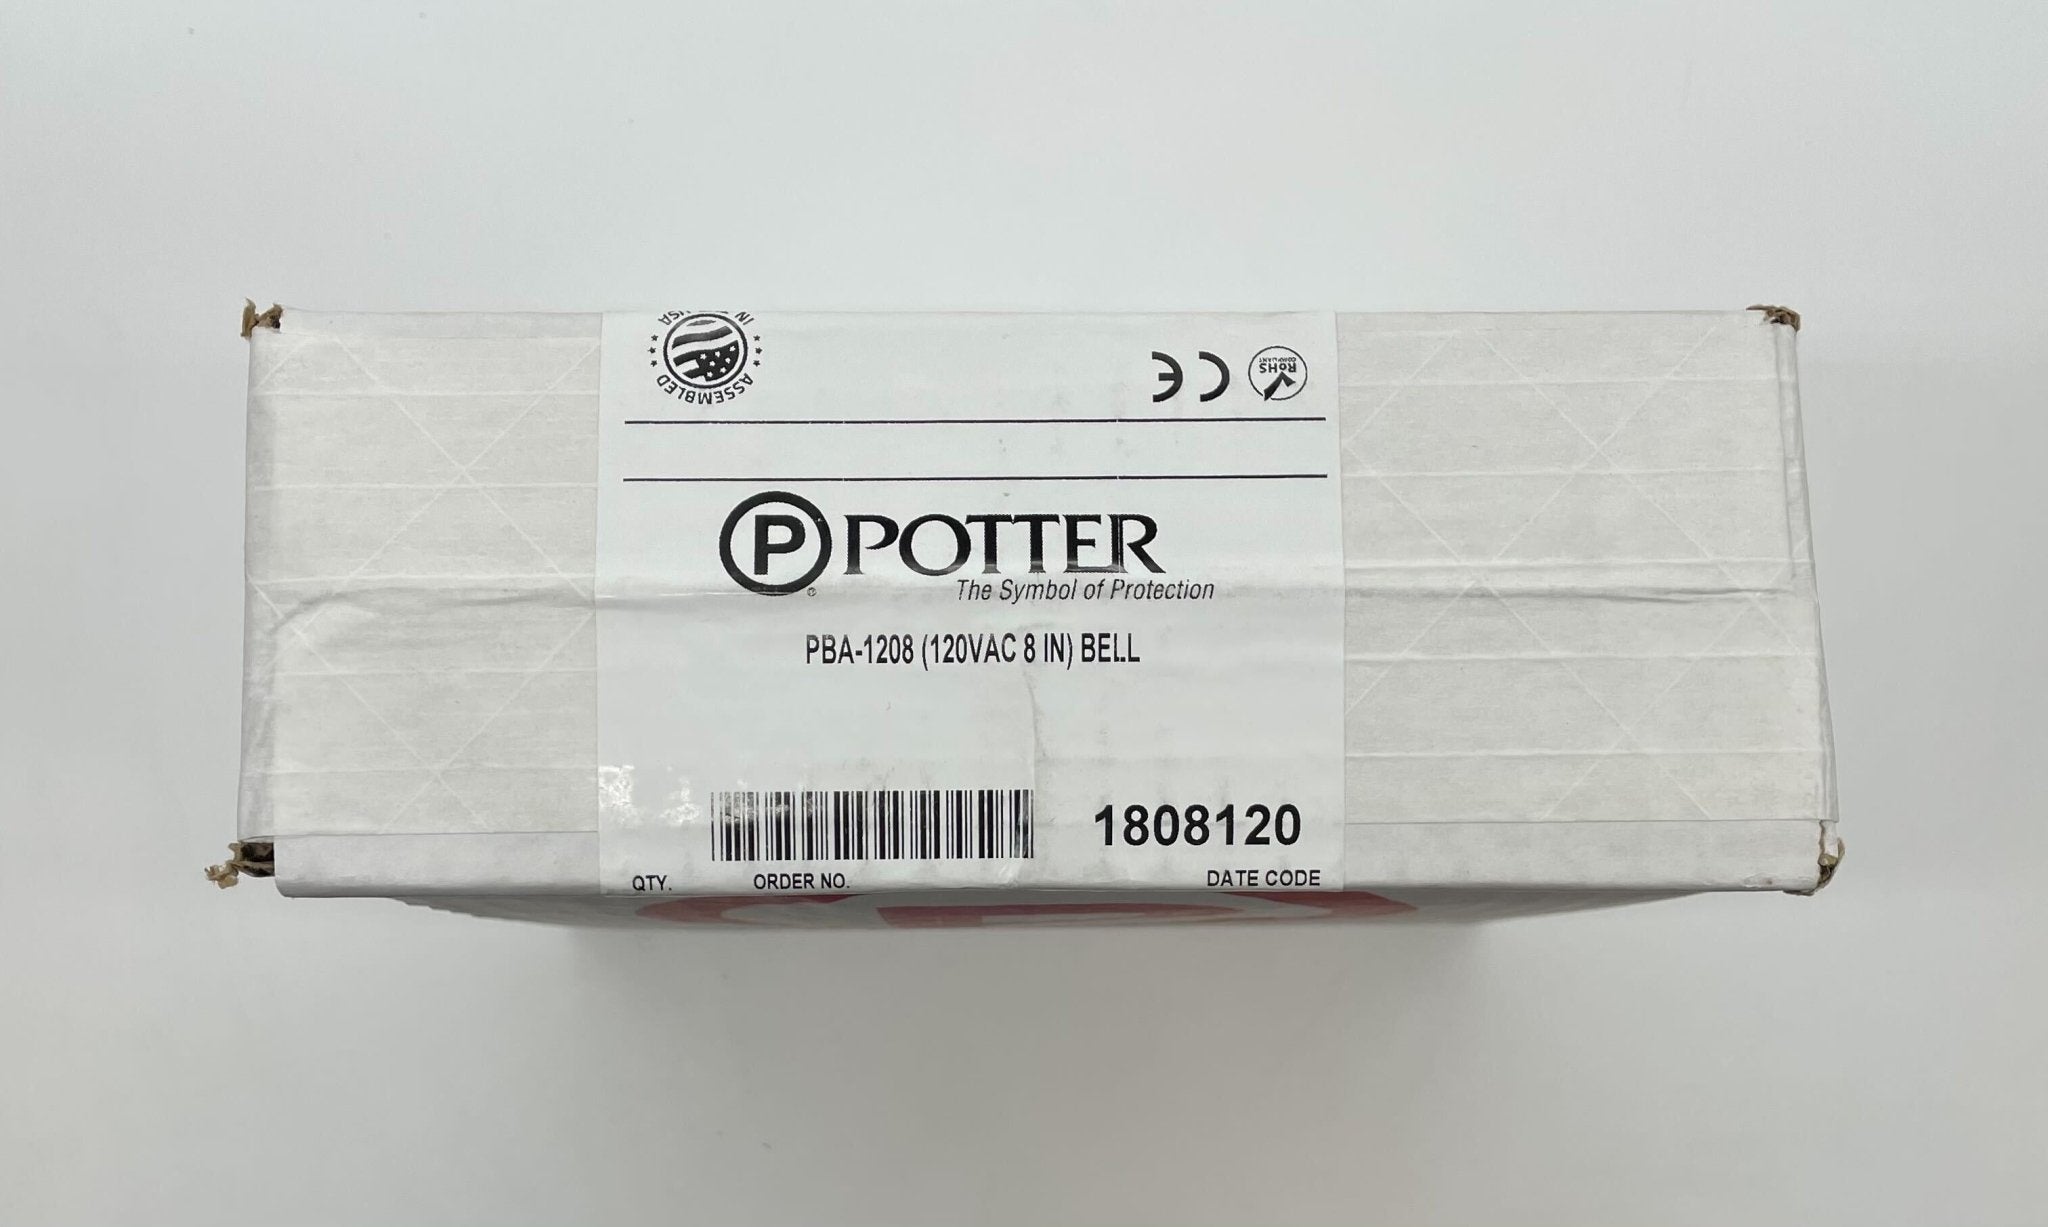 Potter PBA-1208 - The Fire Alarm Supplier